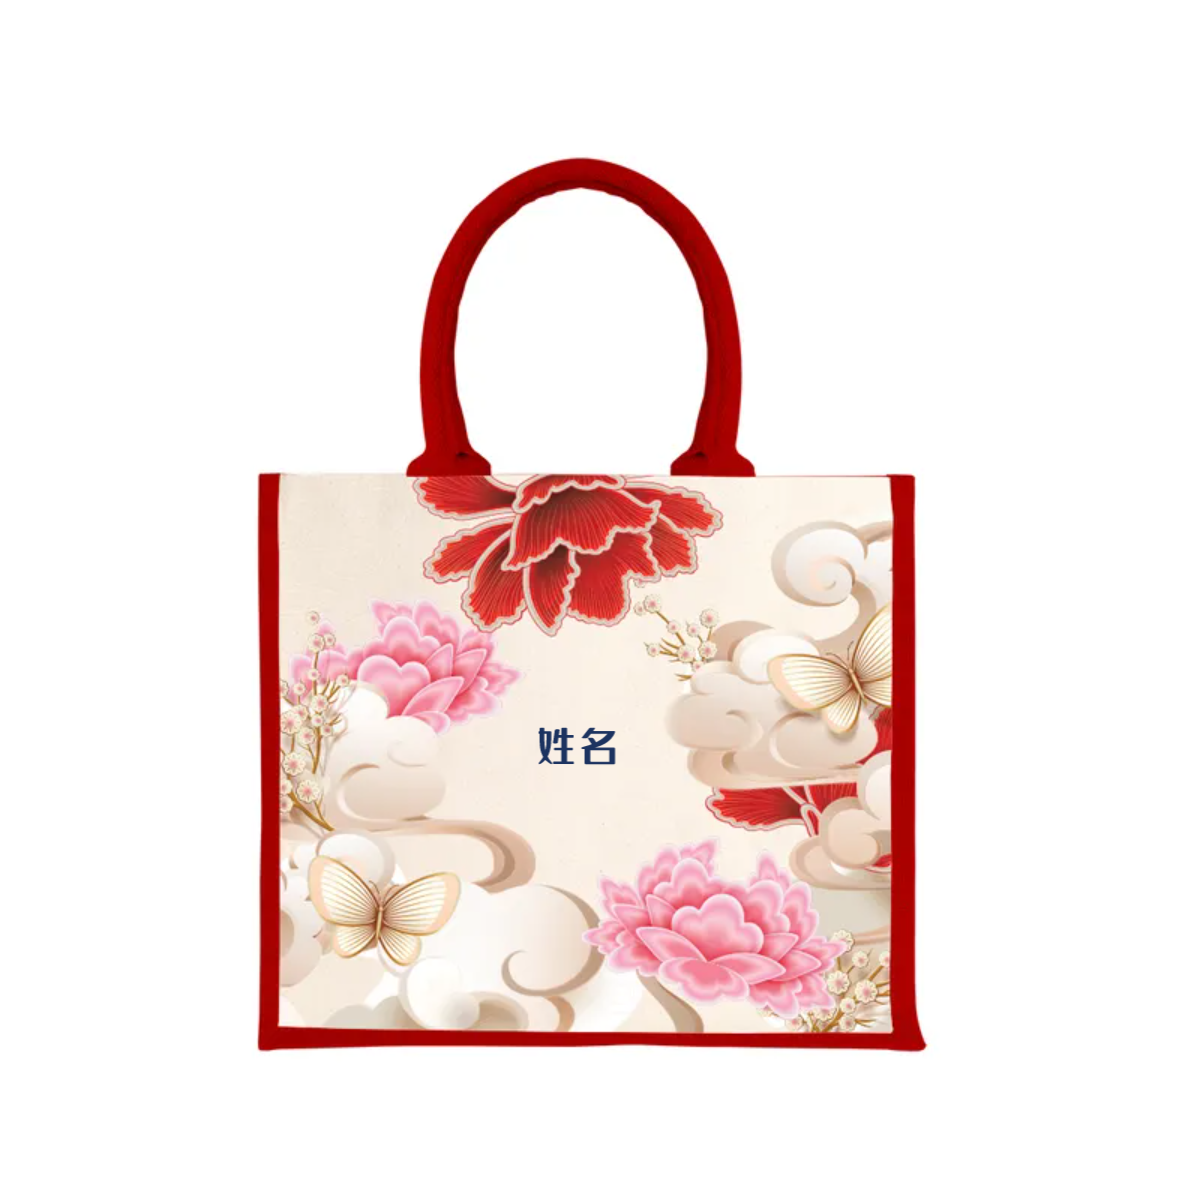 Endless Flourish Series - Red Jute Bag